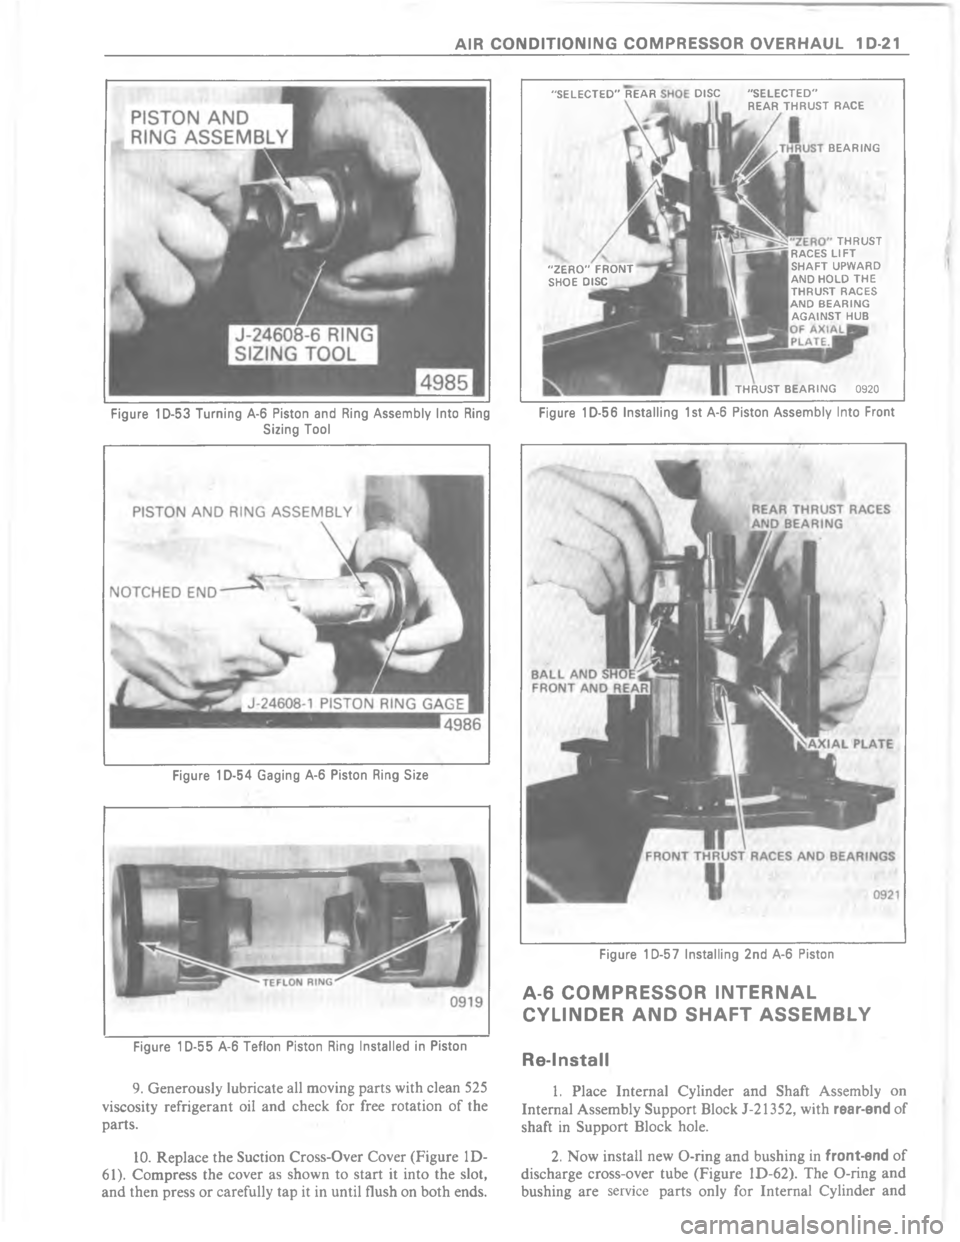 CHEVROLET LIGHT DUTY TRUCK 1980  Repair Everhaul Manual Downloaded from www.Manualslib.com manuals search engine  	   C!$7)/- @  	)/($(7 E $%60( (, $(7 %%-&2*3 (60 $(7
$
!$7\)
!$7
=


8B